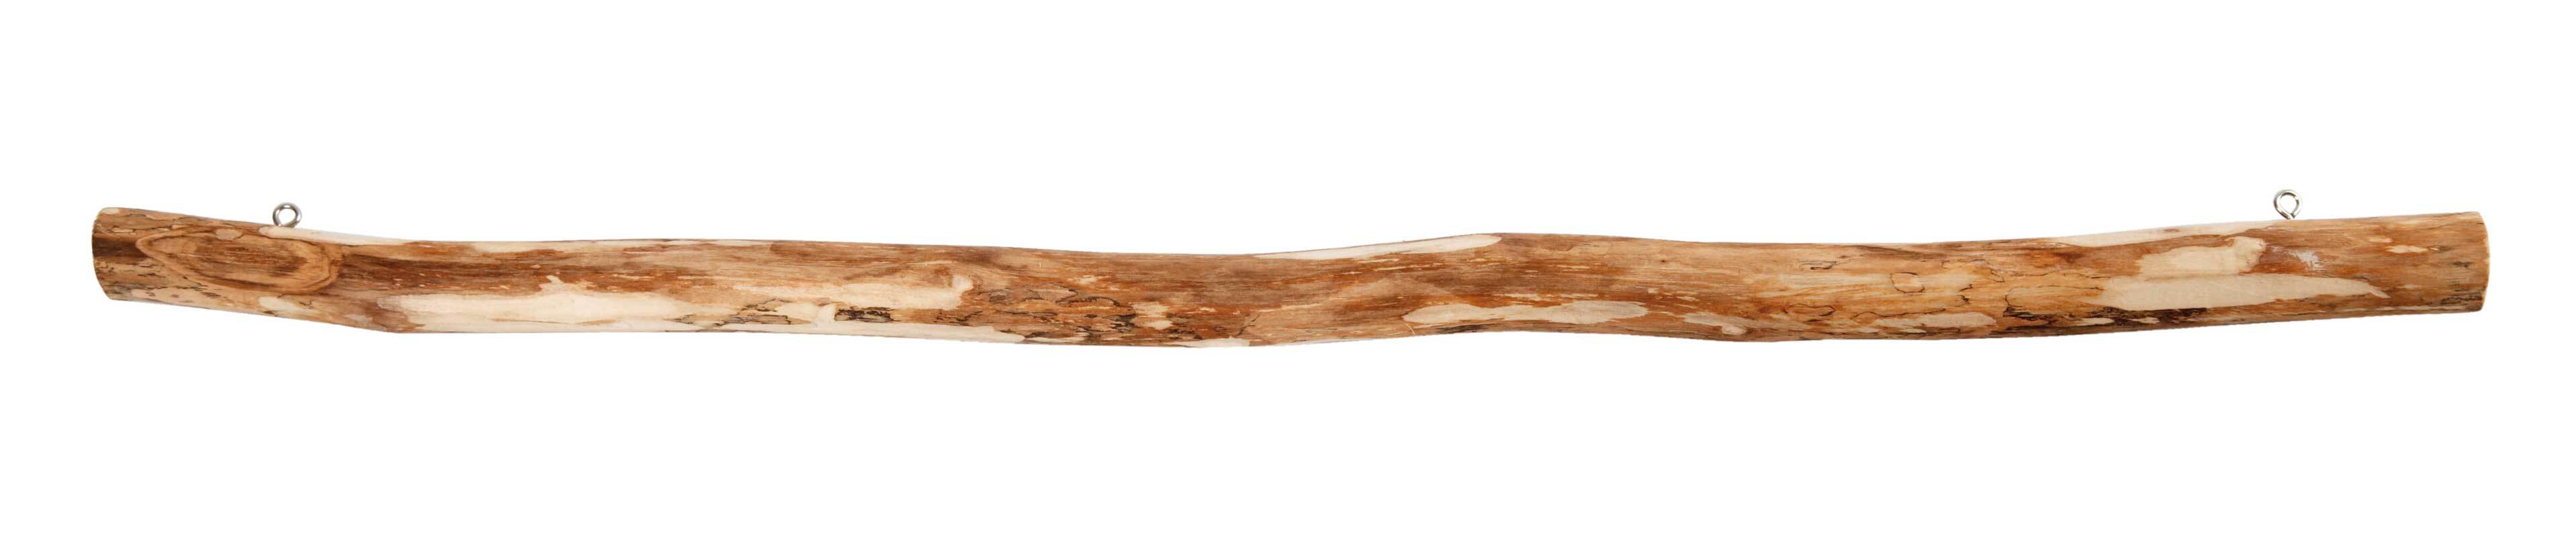 Holzstock, 40 cm